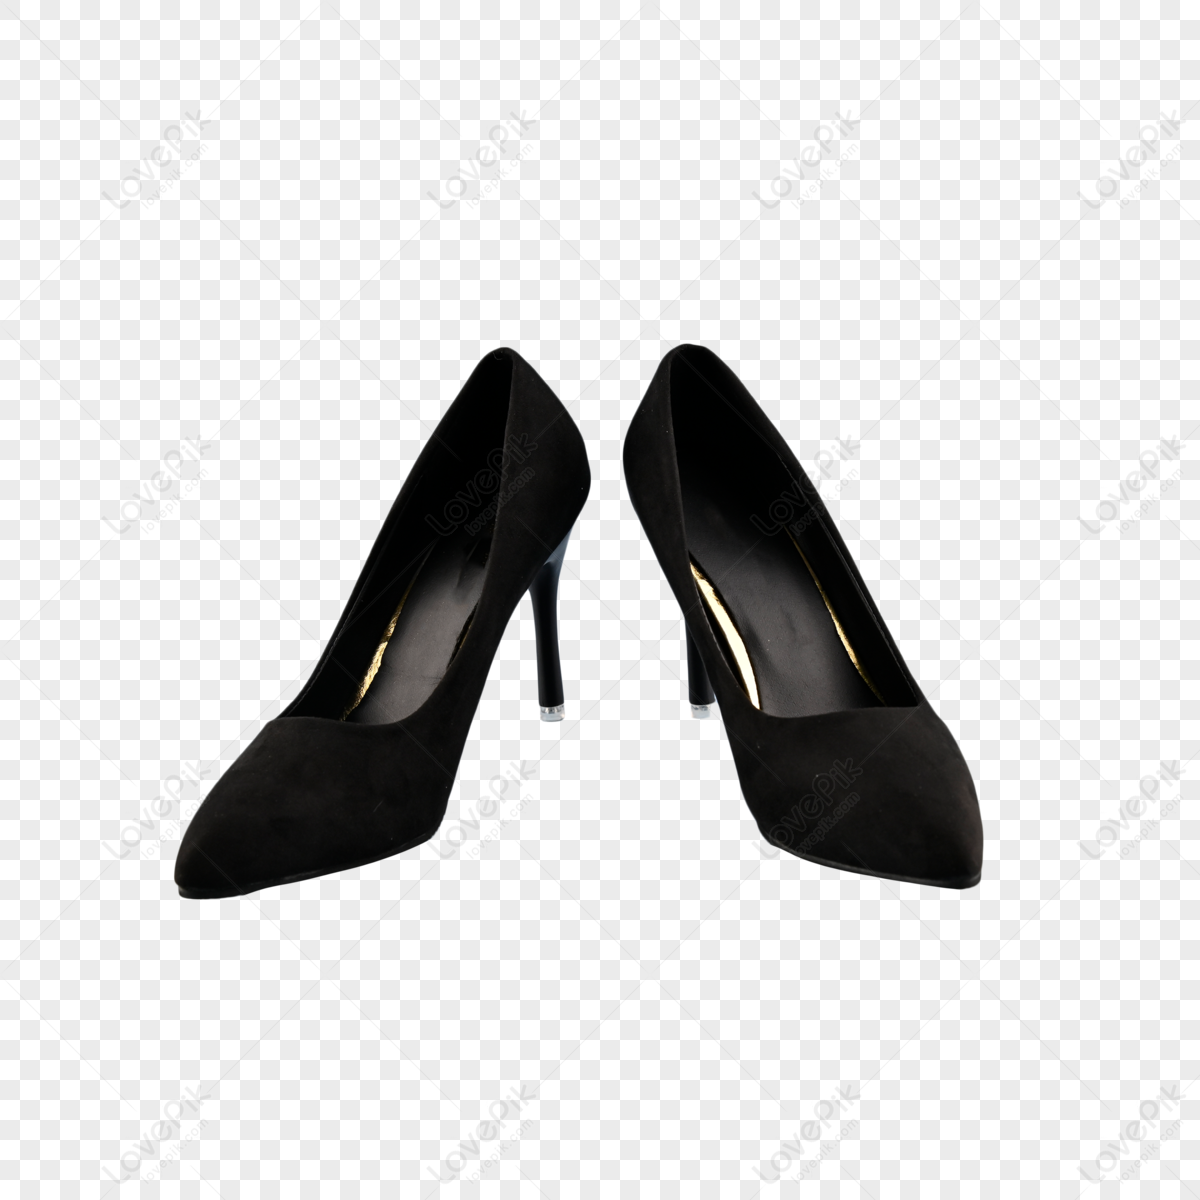 Fashion shoe elegance, high heels sensuality, women glamour clothing shiny  beauty luxury femininity generated by AI 30908490 Stock Photo at Vecteezy